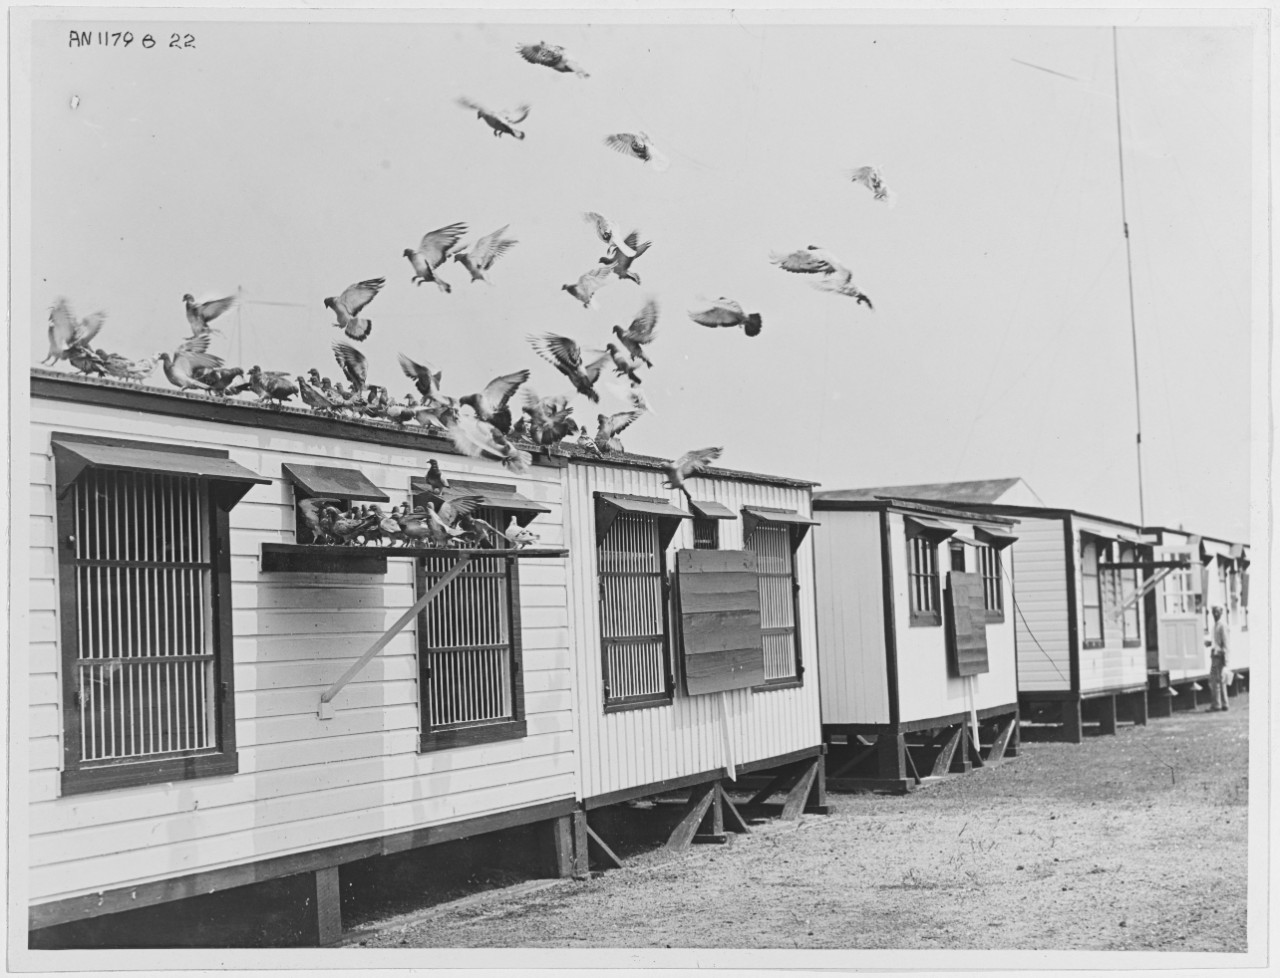 Pigeons alighting on the landing platform on top of their loft